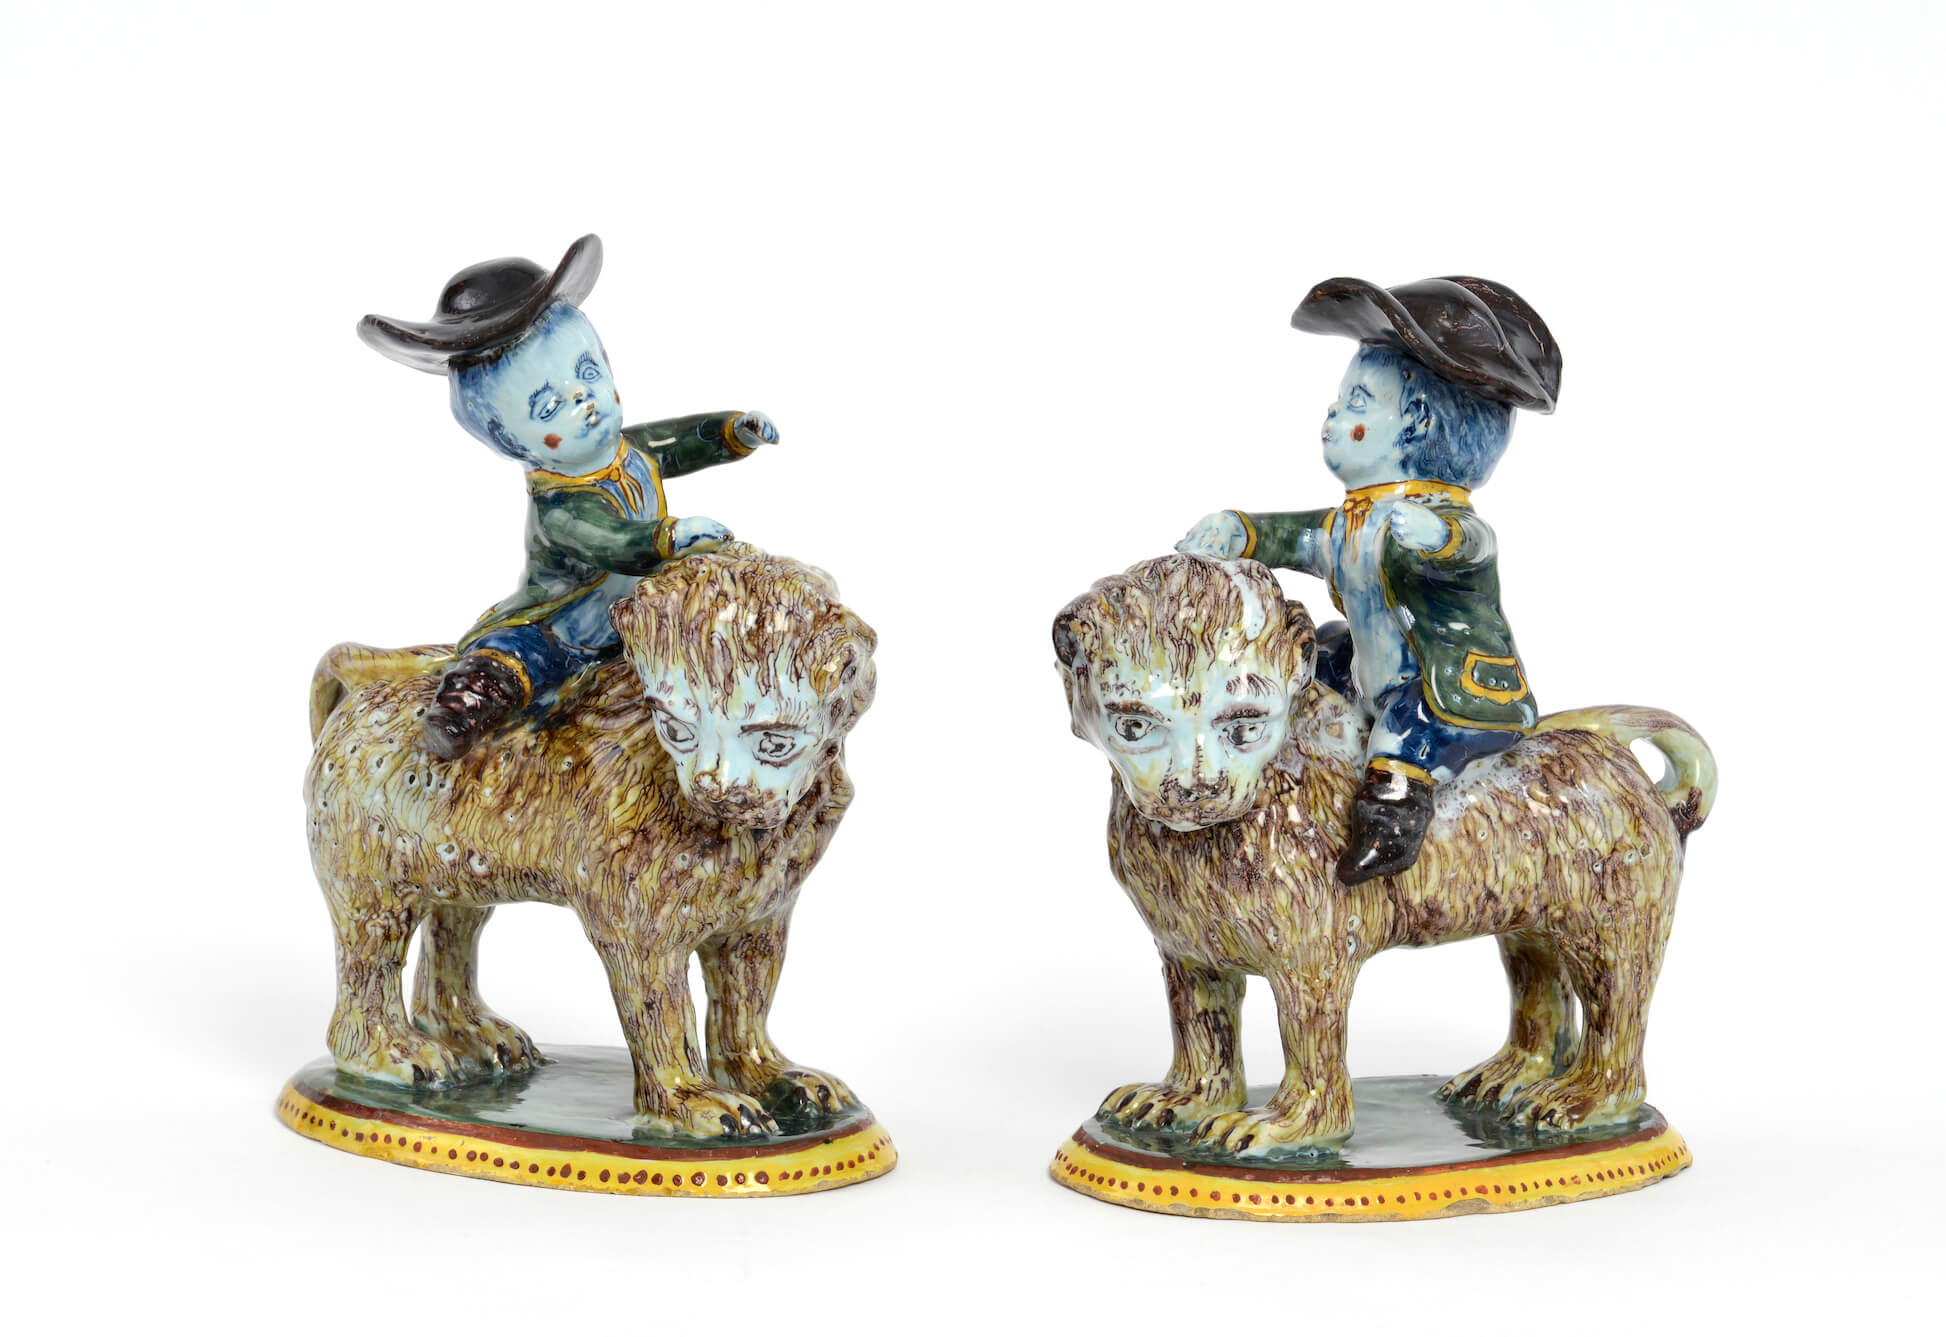 Antique polychrome figurine of boys riding lions at Aronson Antiquairs